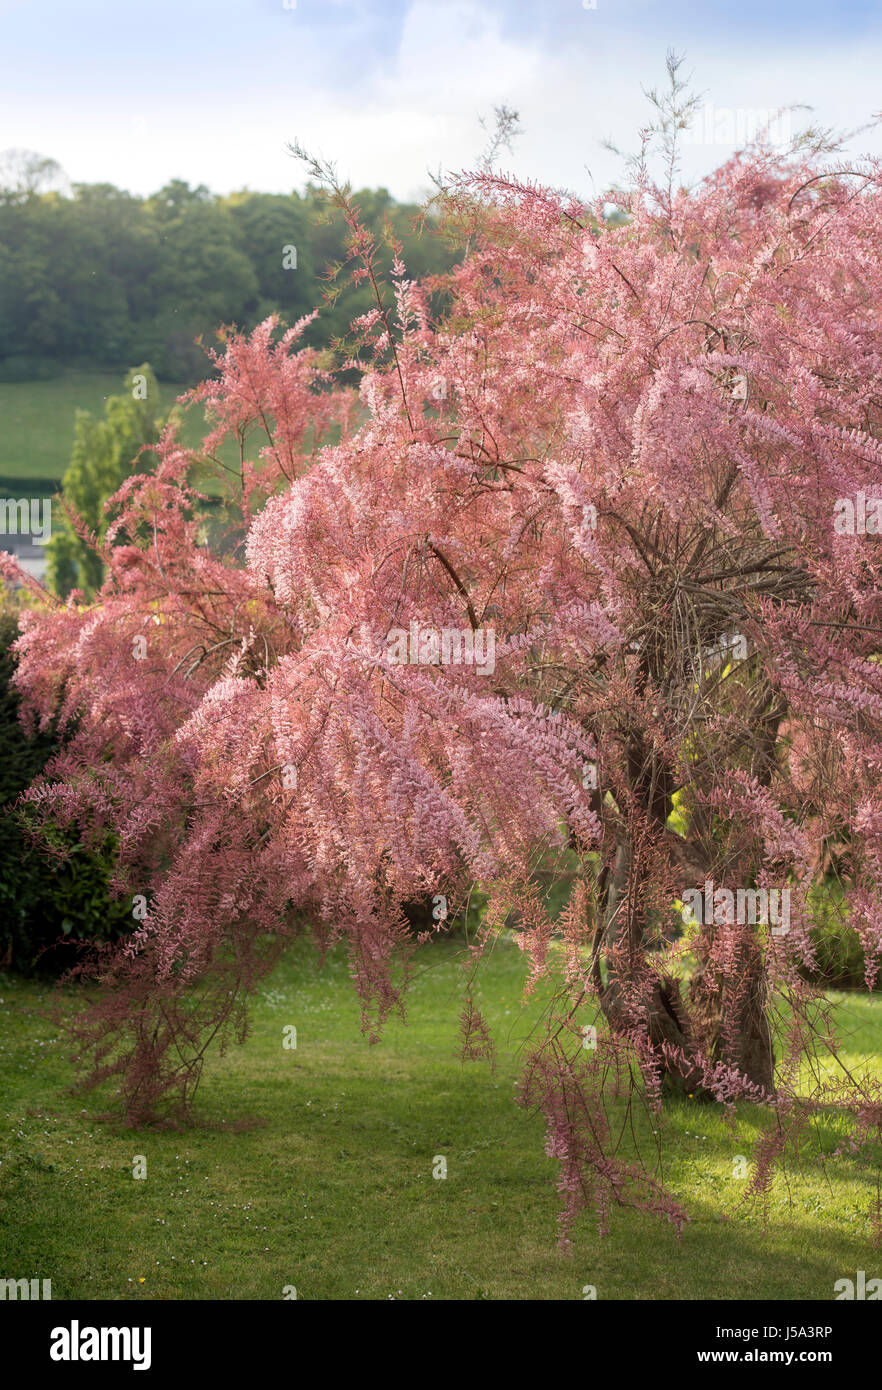 A Tamarisk tree in a garden UK Stock Photo